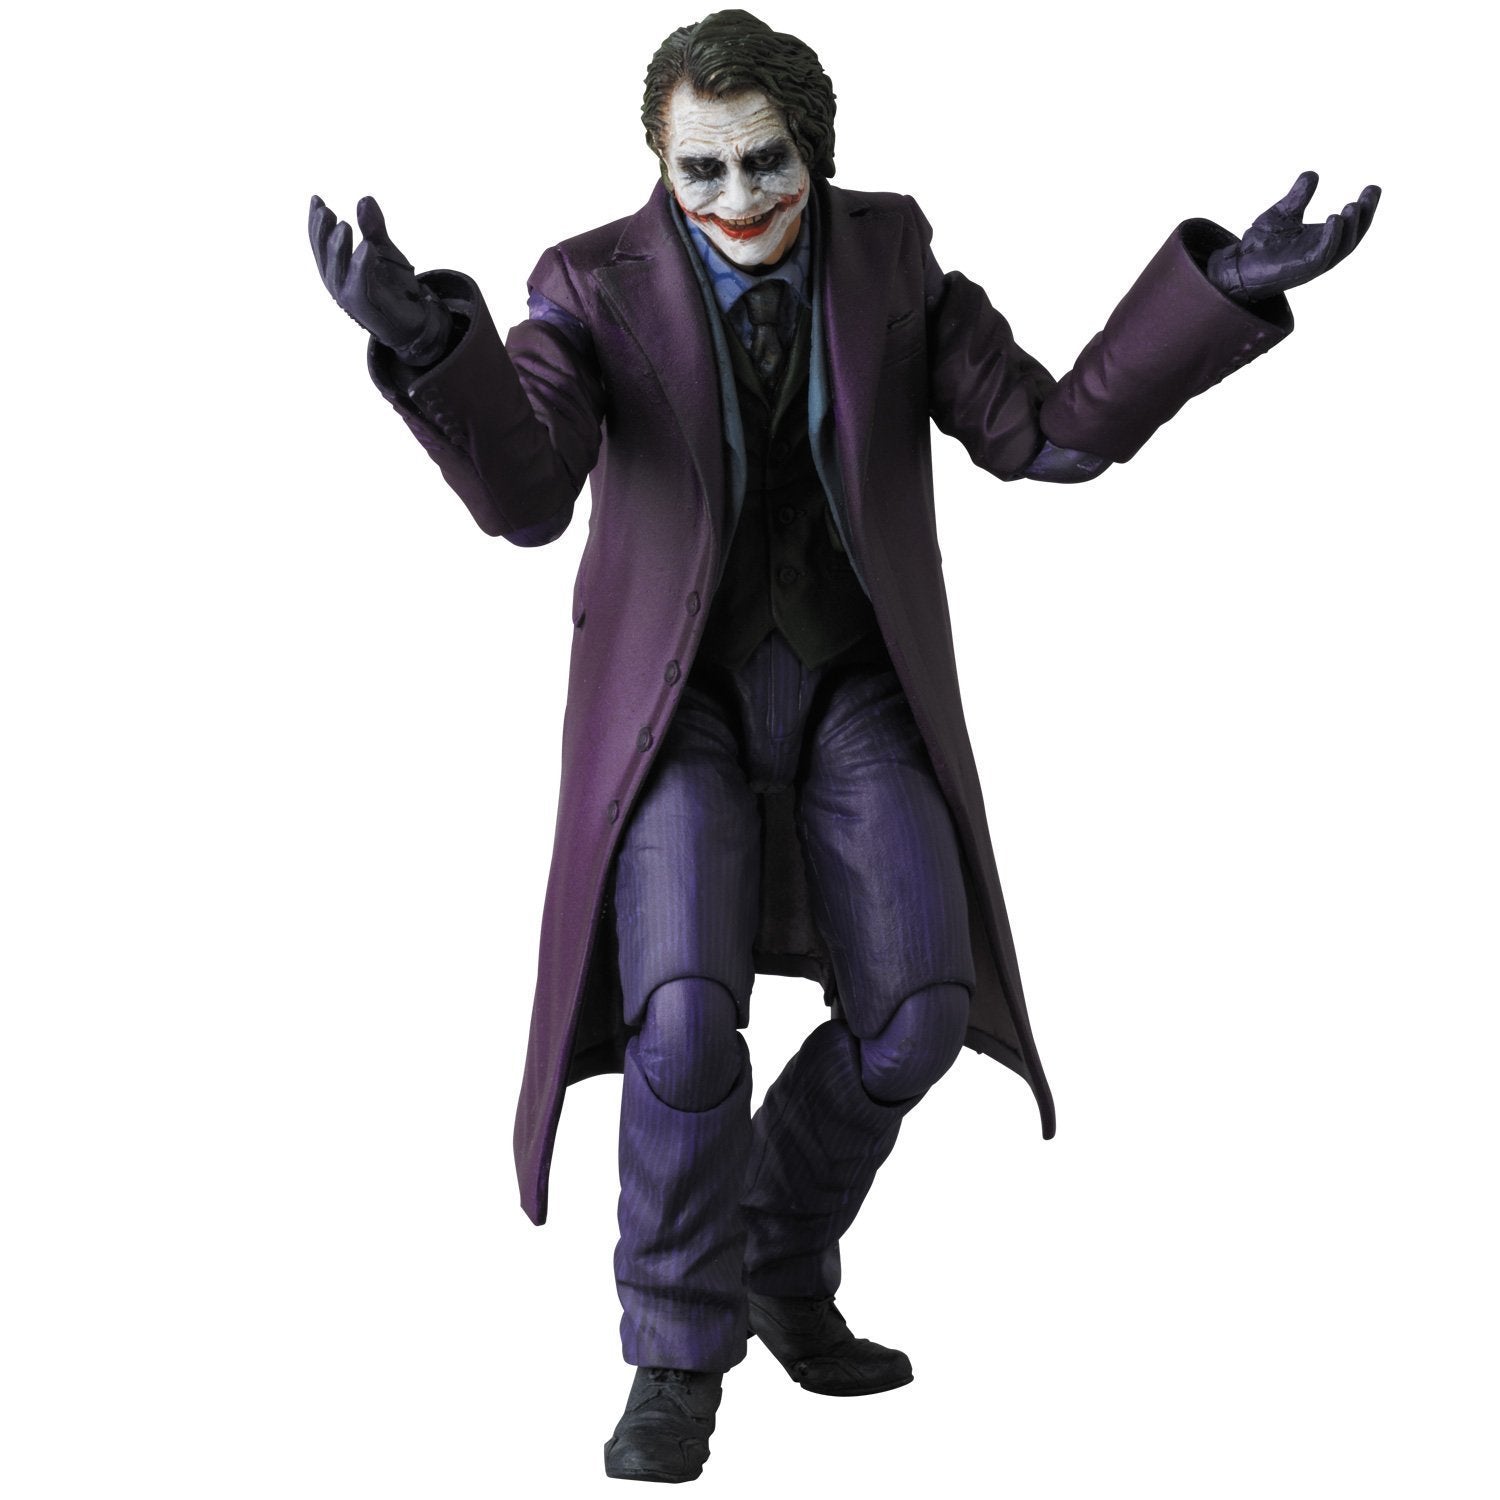 Medicom The Dark Knight: The Joker MAFEX Figure - Nerd Arena